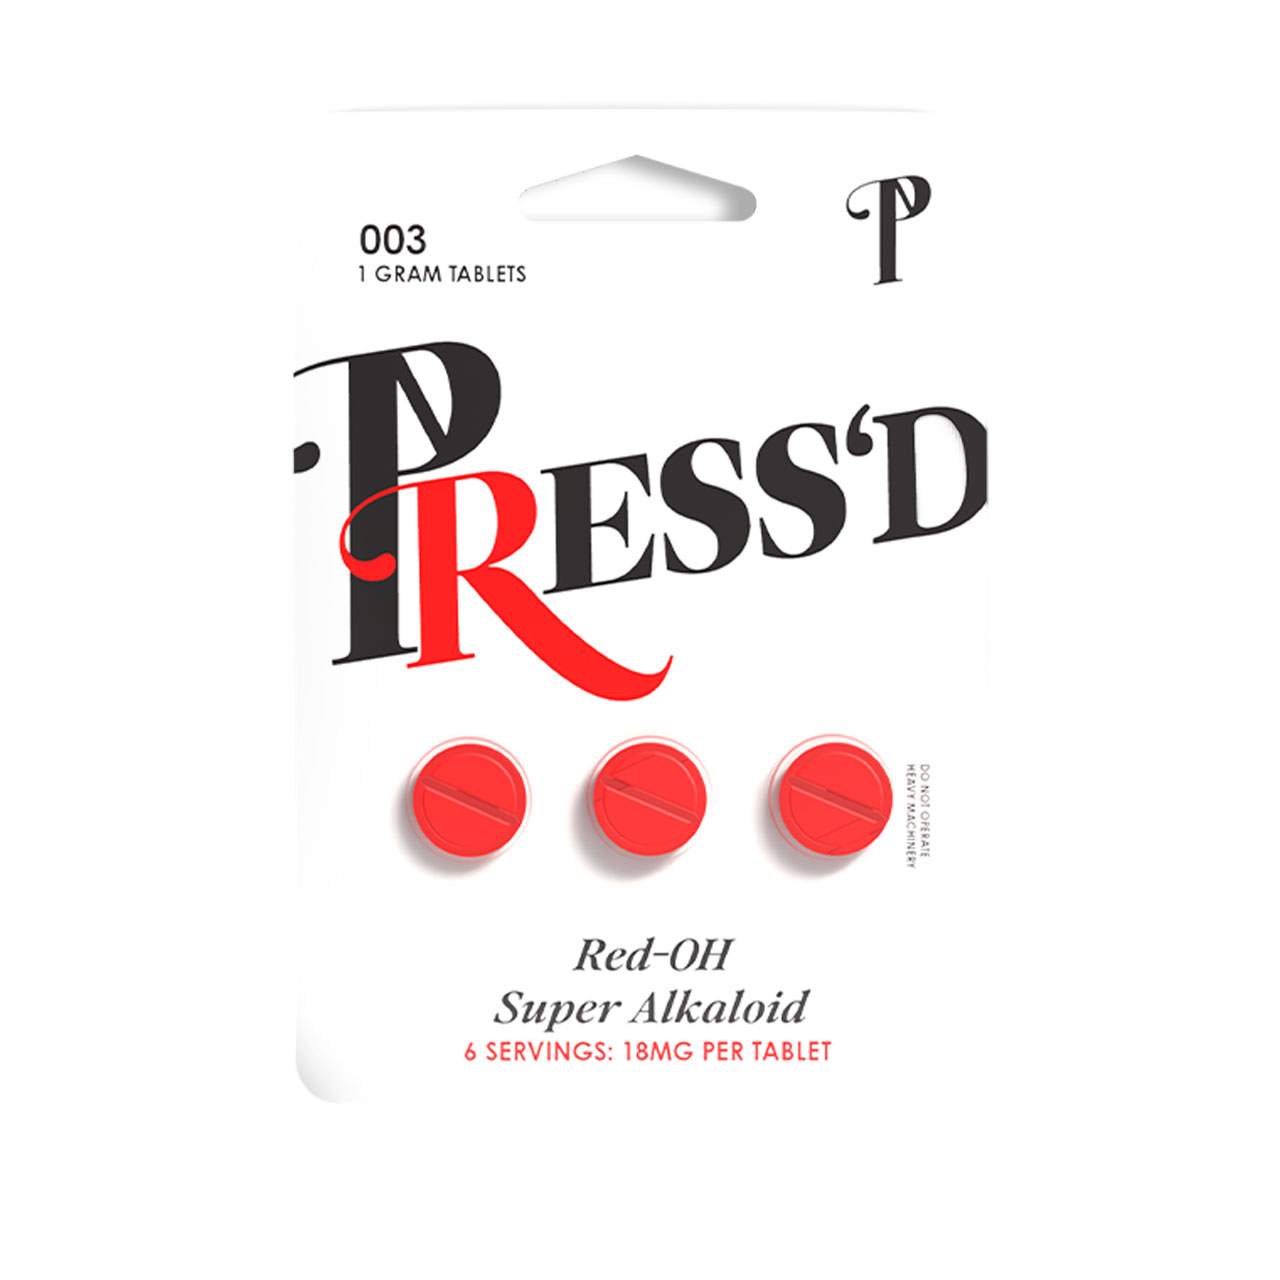 Press'd 7 - Red-OH Super Alkaloid 1 Gram Tablets - 3PK